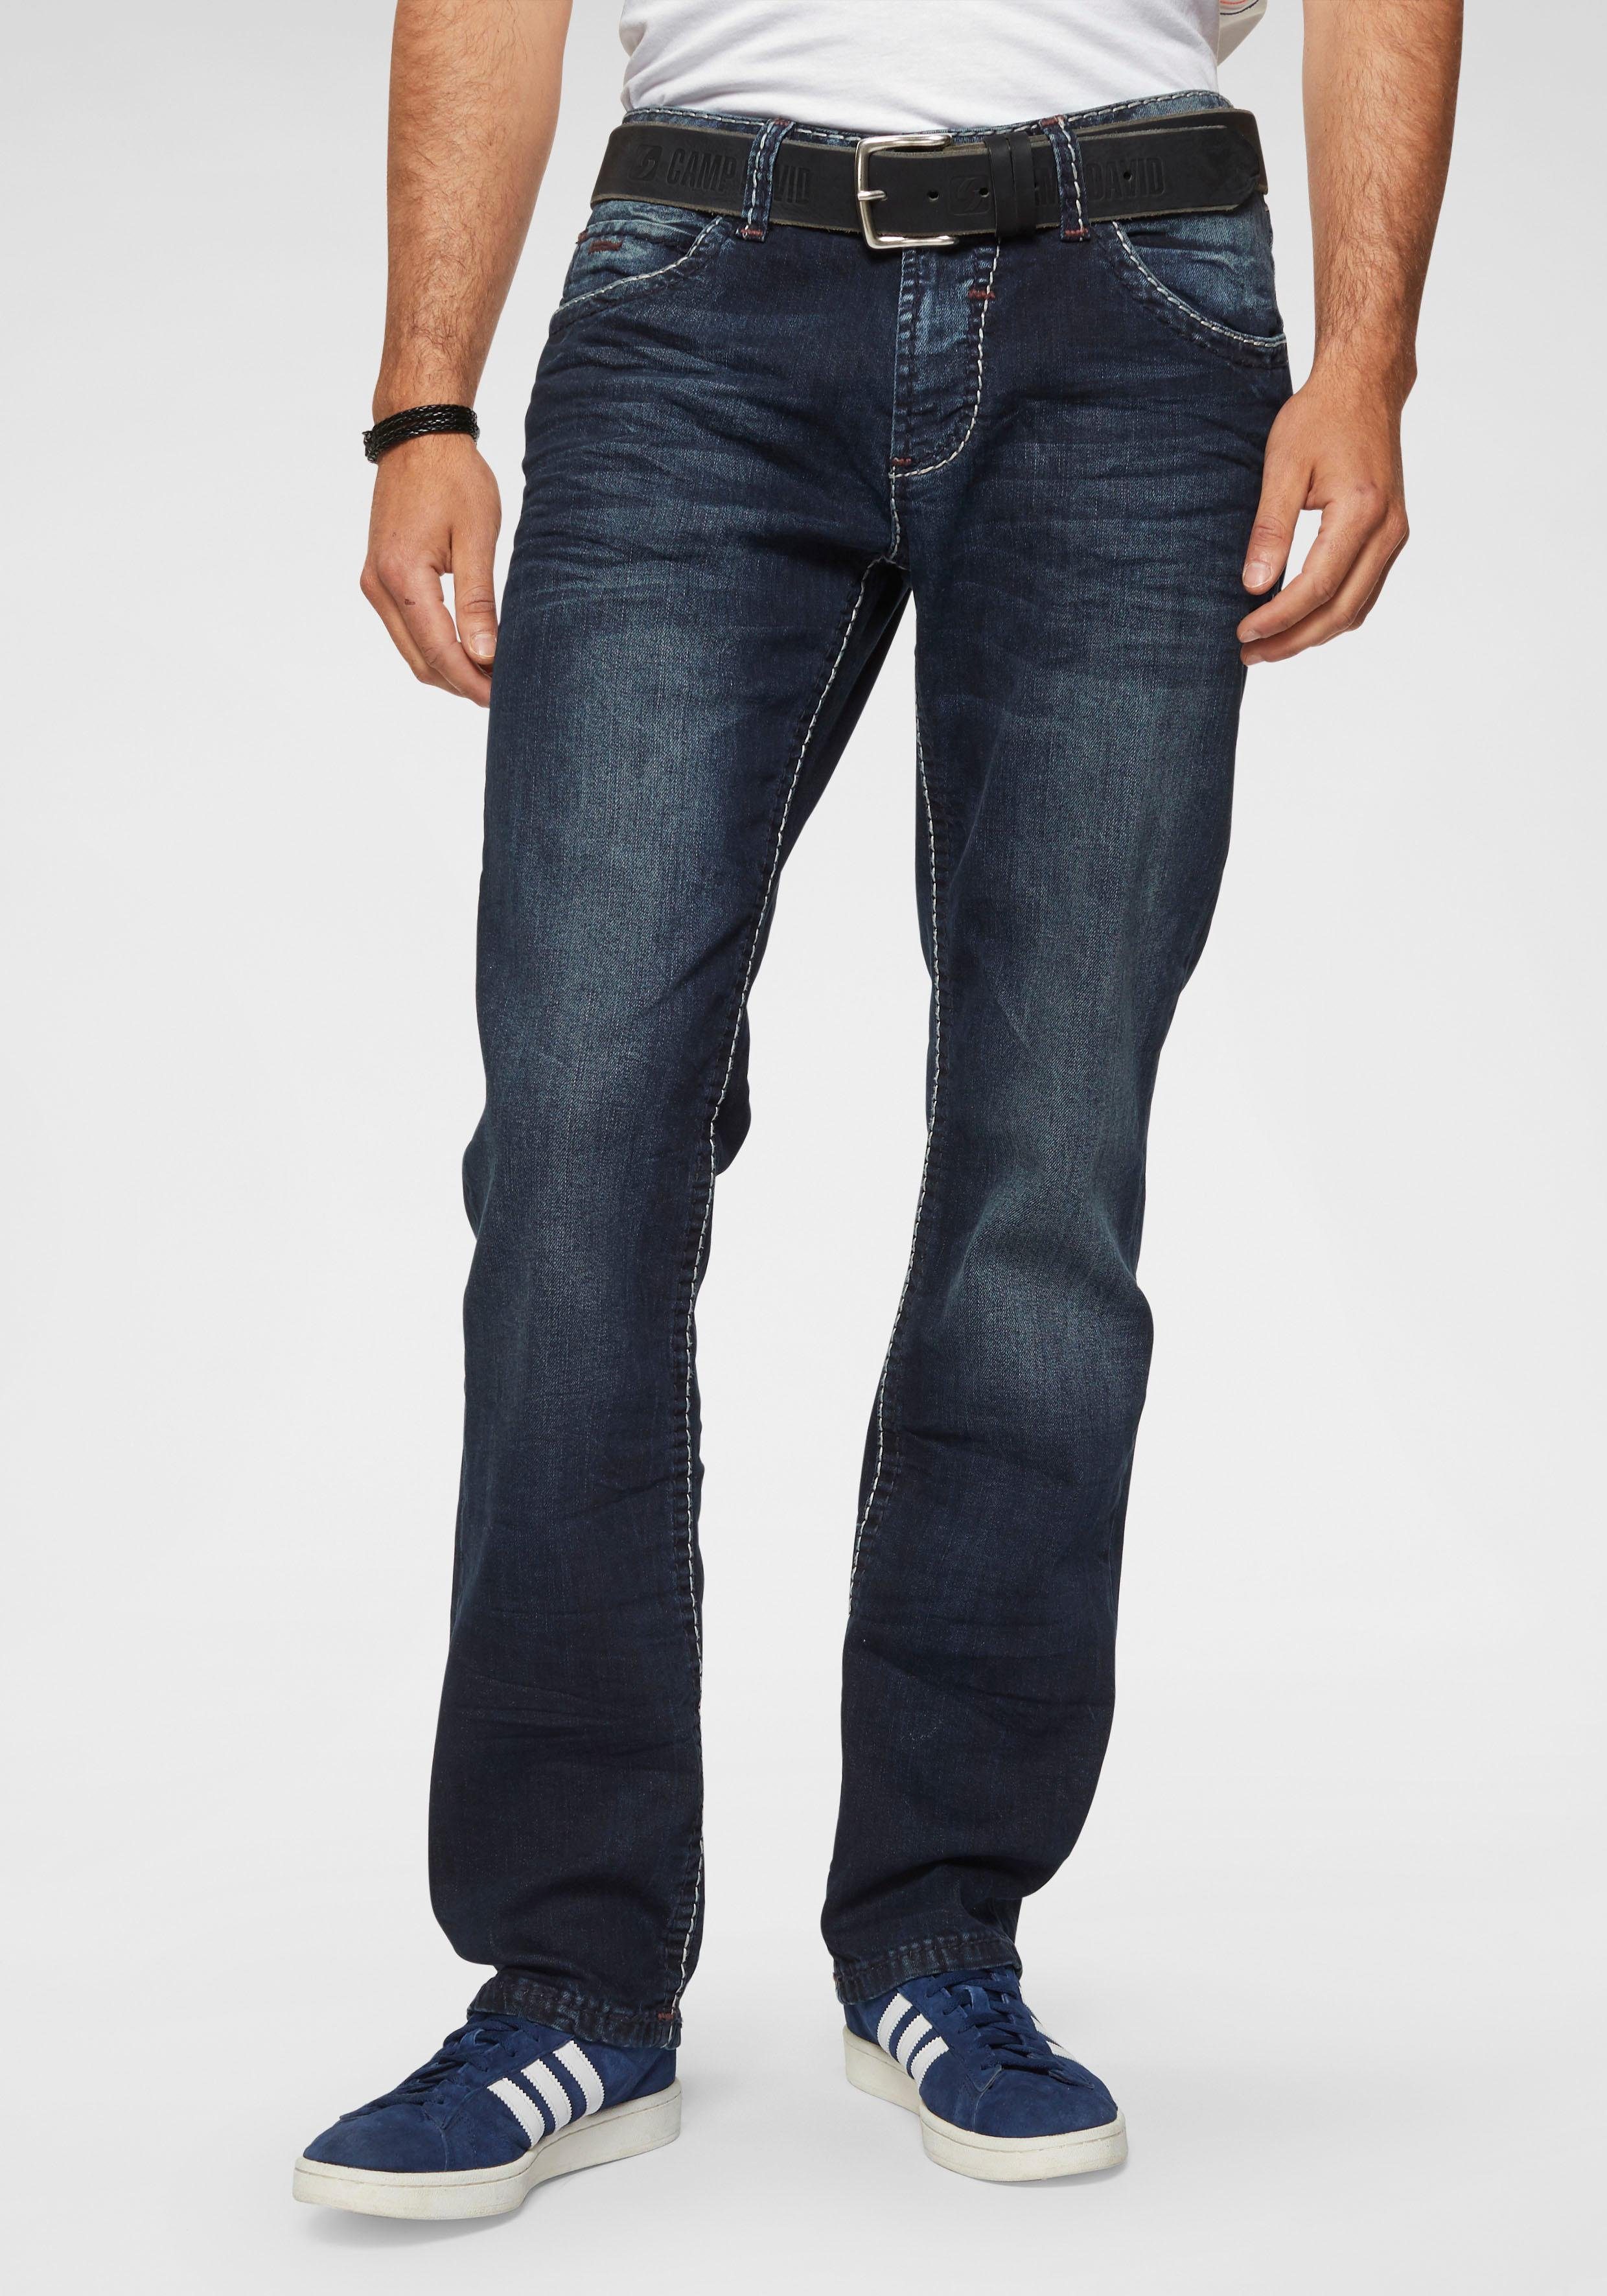 CAMP DAVID Straight-Jeans NI:CO:R611 mit markanten Steppnähten dark-used